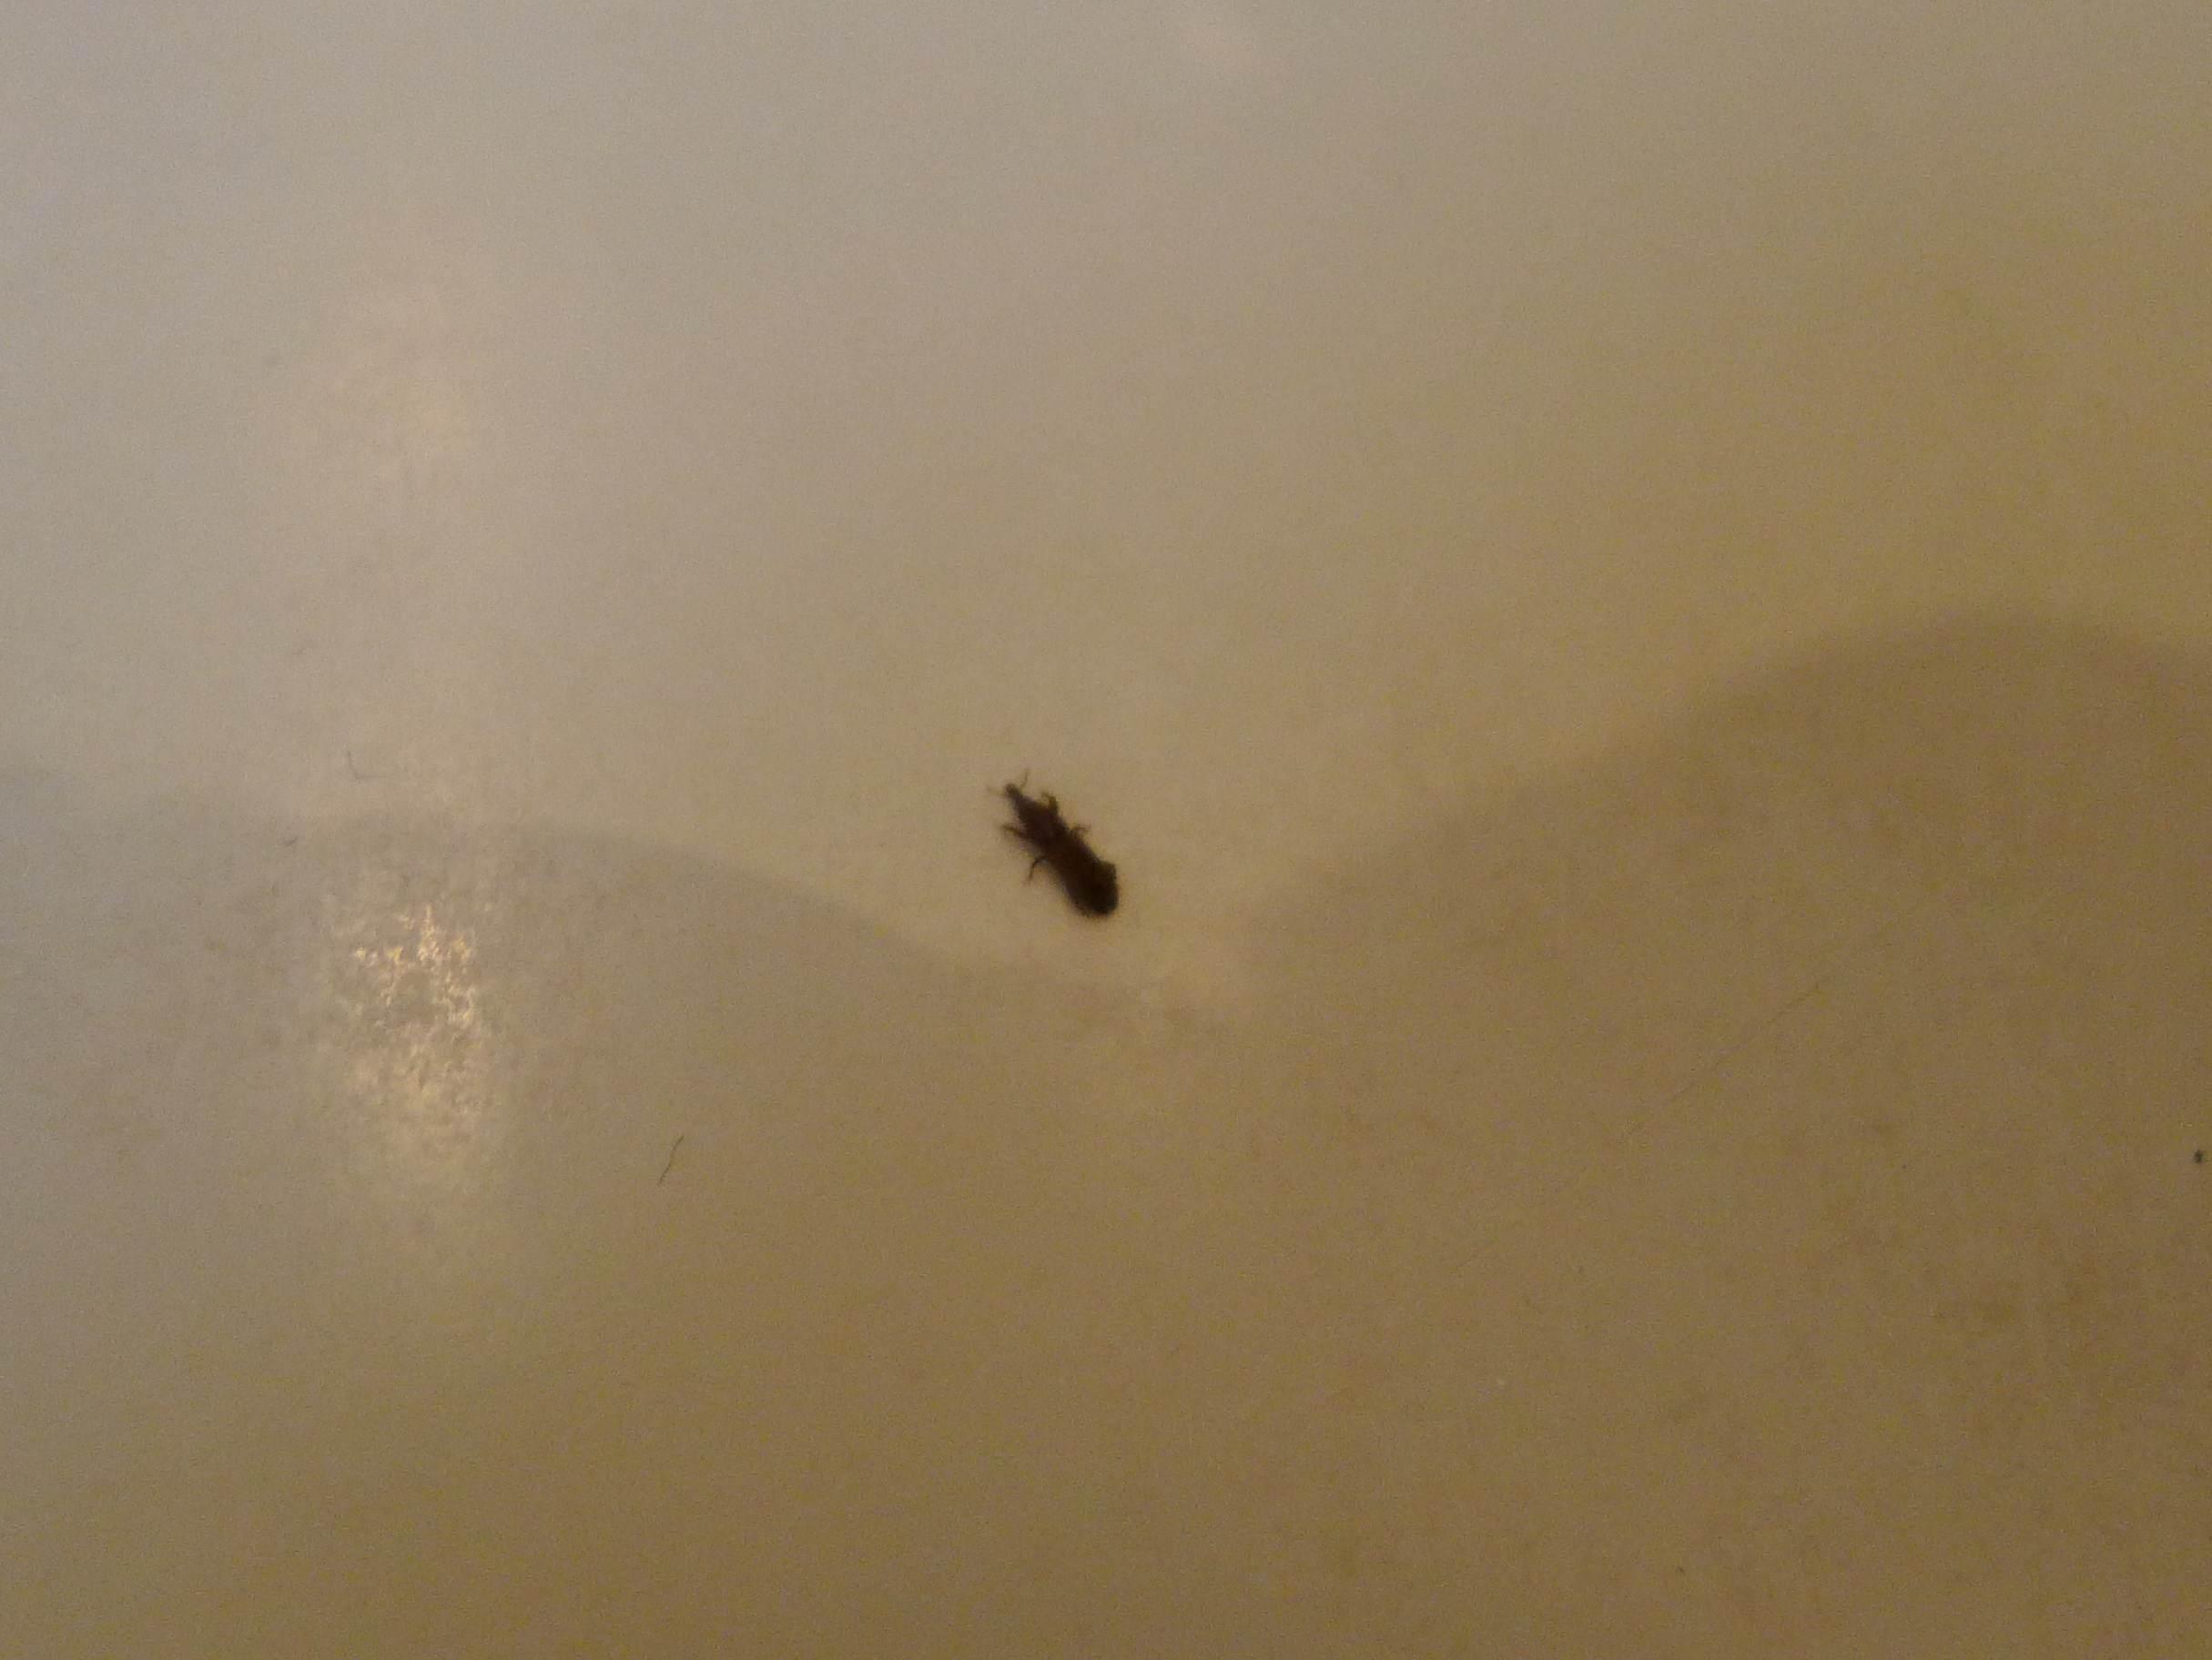 small black bugs irshower & bathroom sink